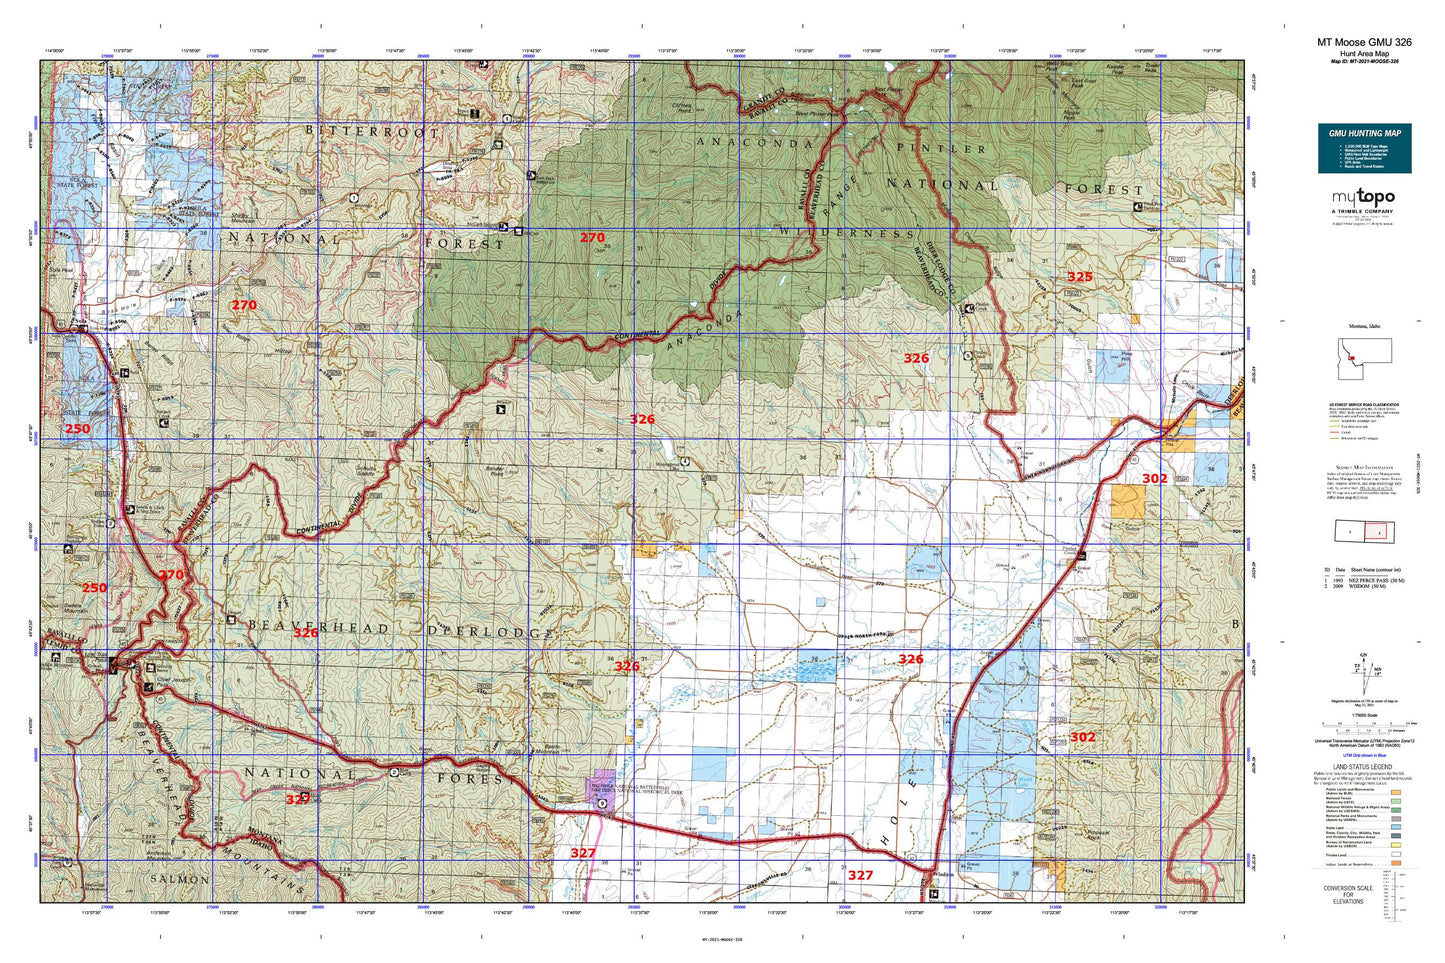 Montana Moose GMU 326 Map Image